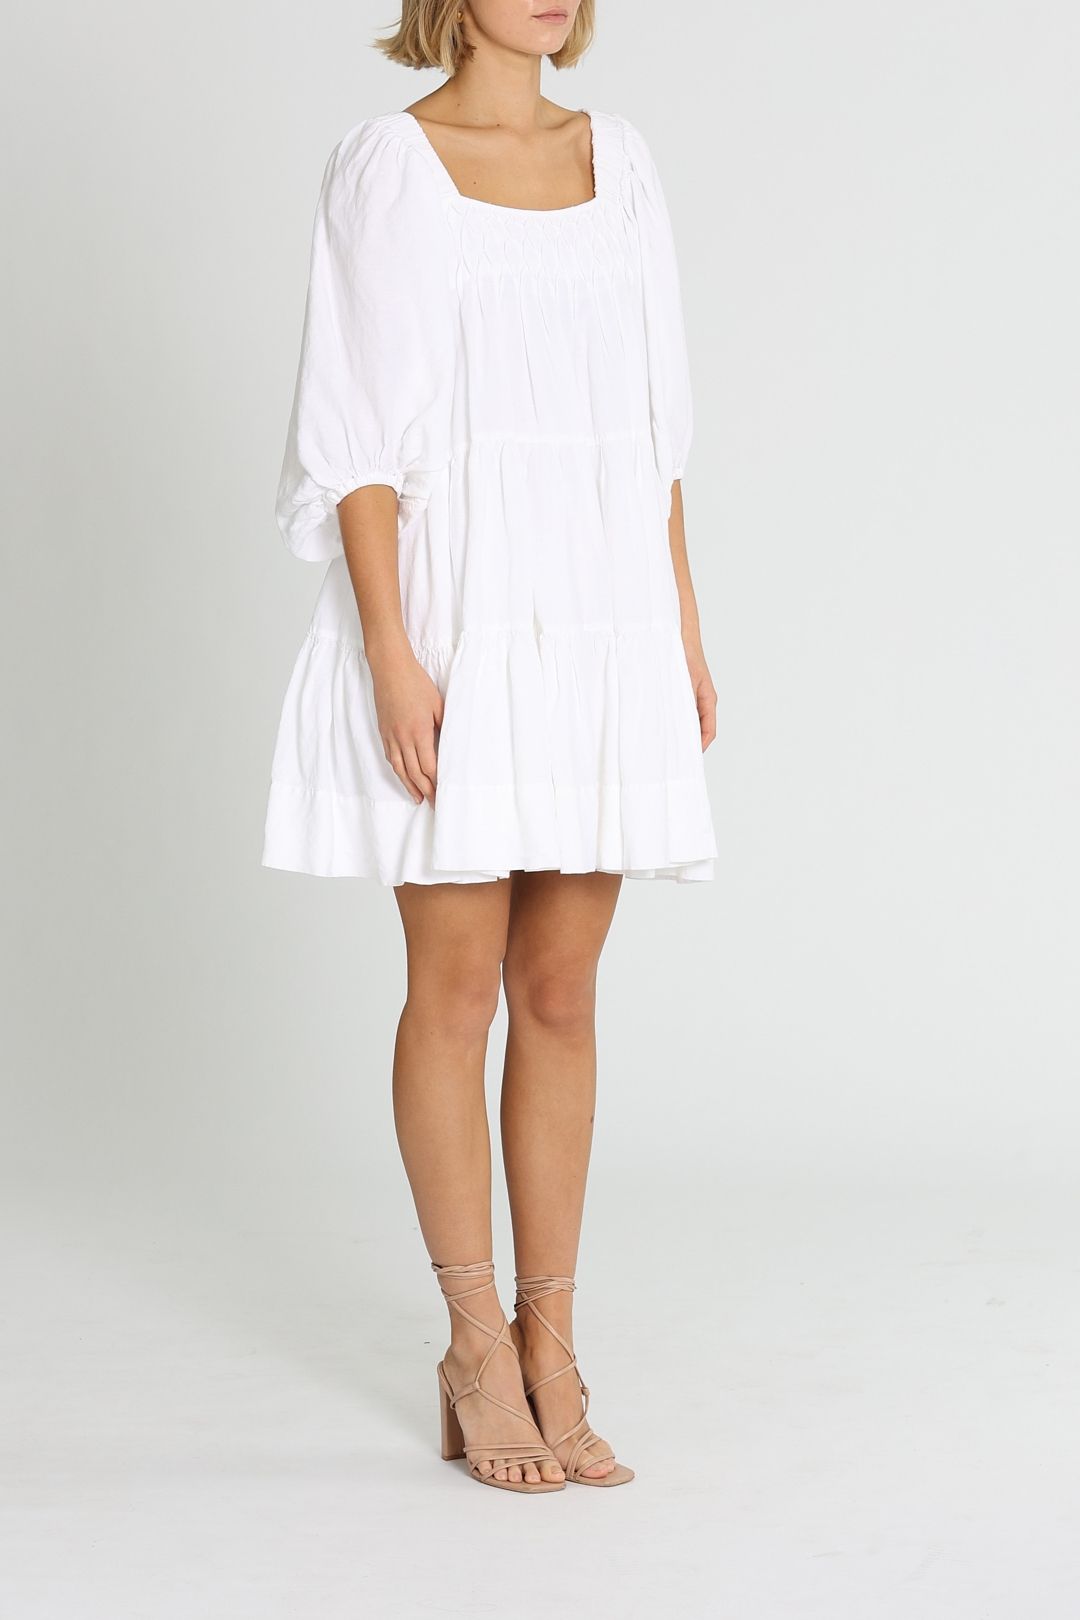 Shona Joy Paulina Tiered Mini Dress White